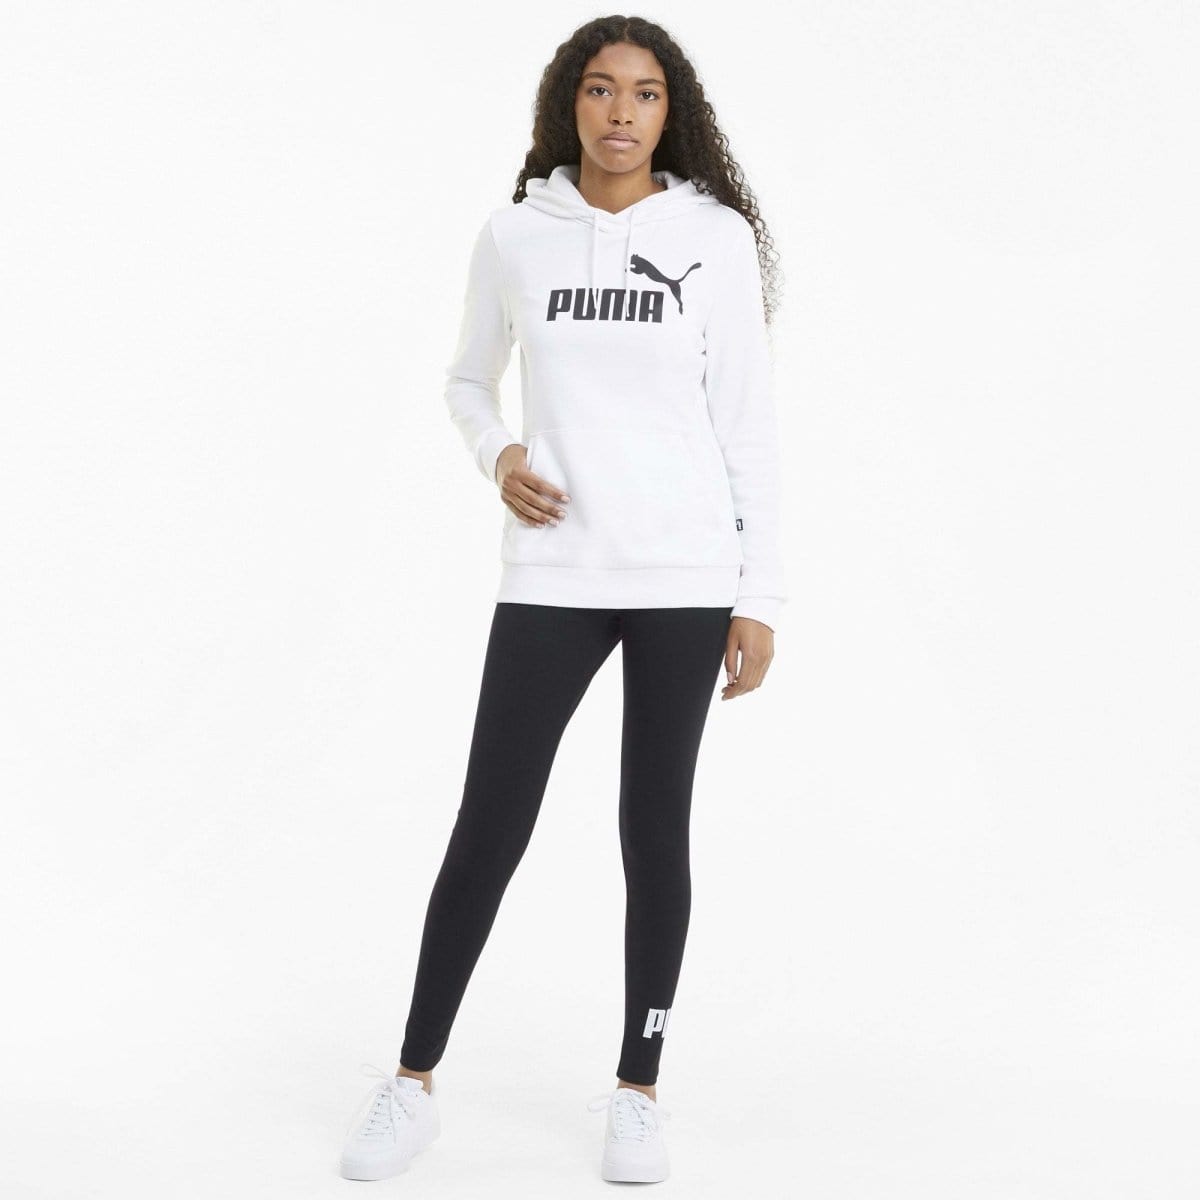 Puma PUMA WOMEN'S ESSENTIAL LOGO BLACK TIGHTS - INSPORT